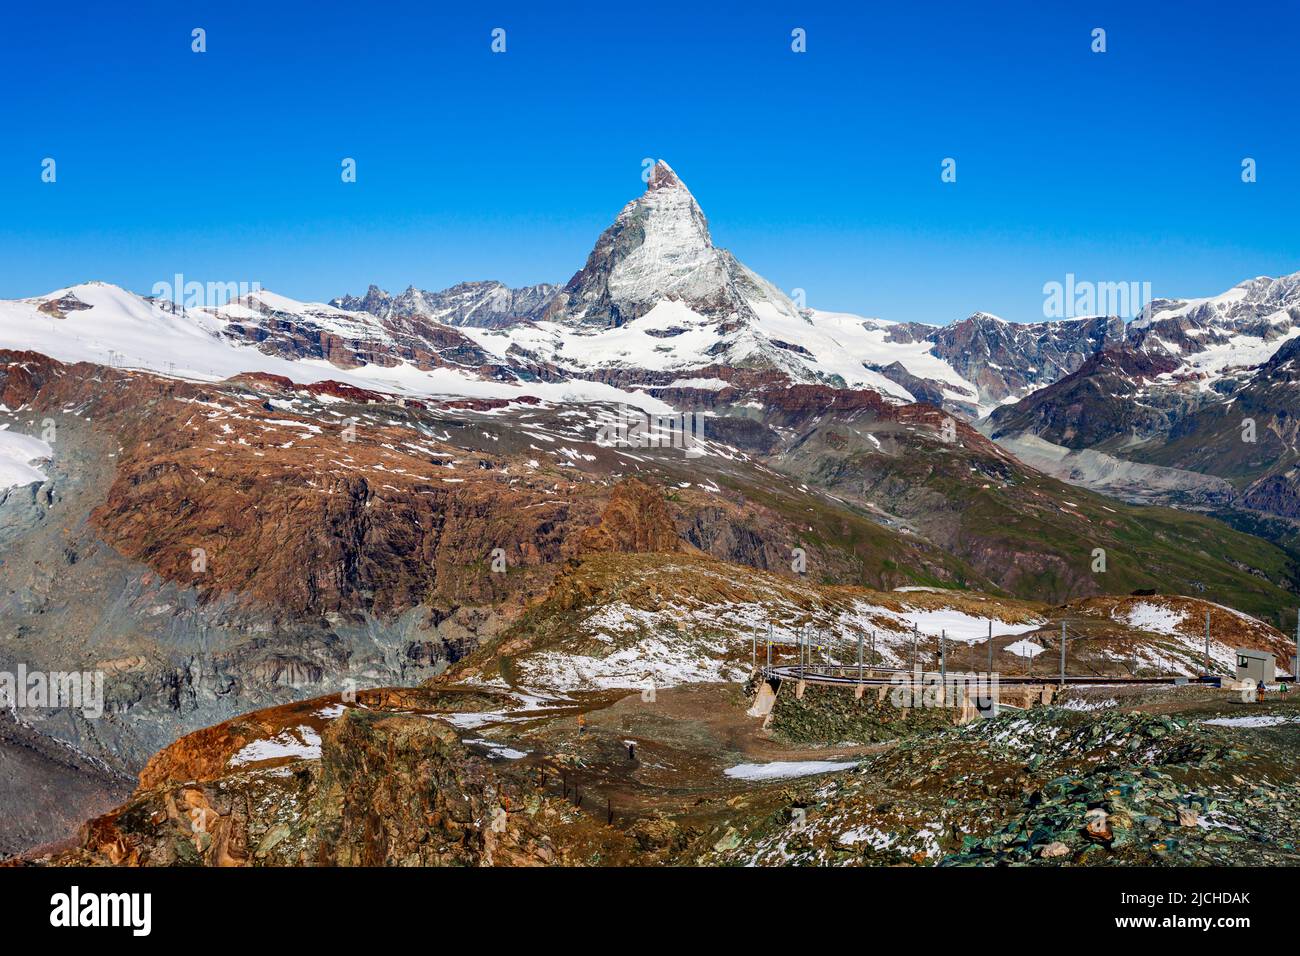 Matterhorn mountain range of the Alps, located between Switzerland and Italy Stock Photo